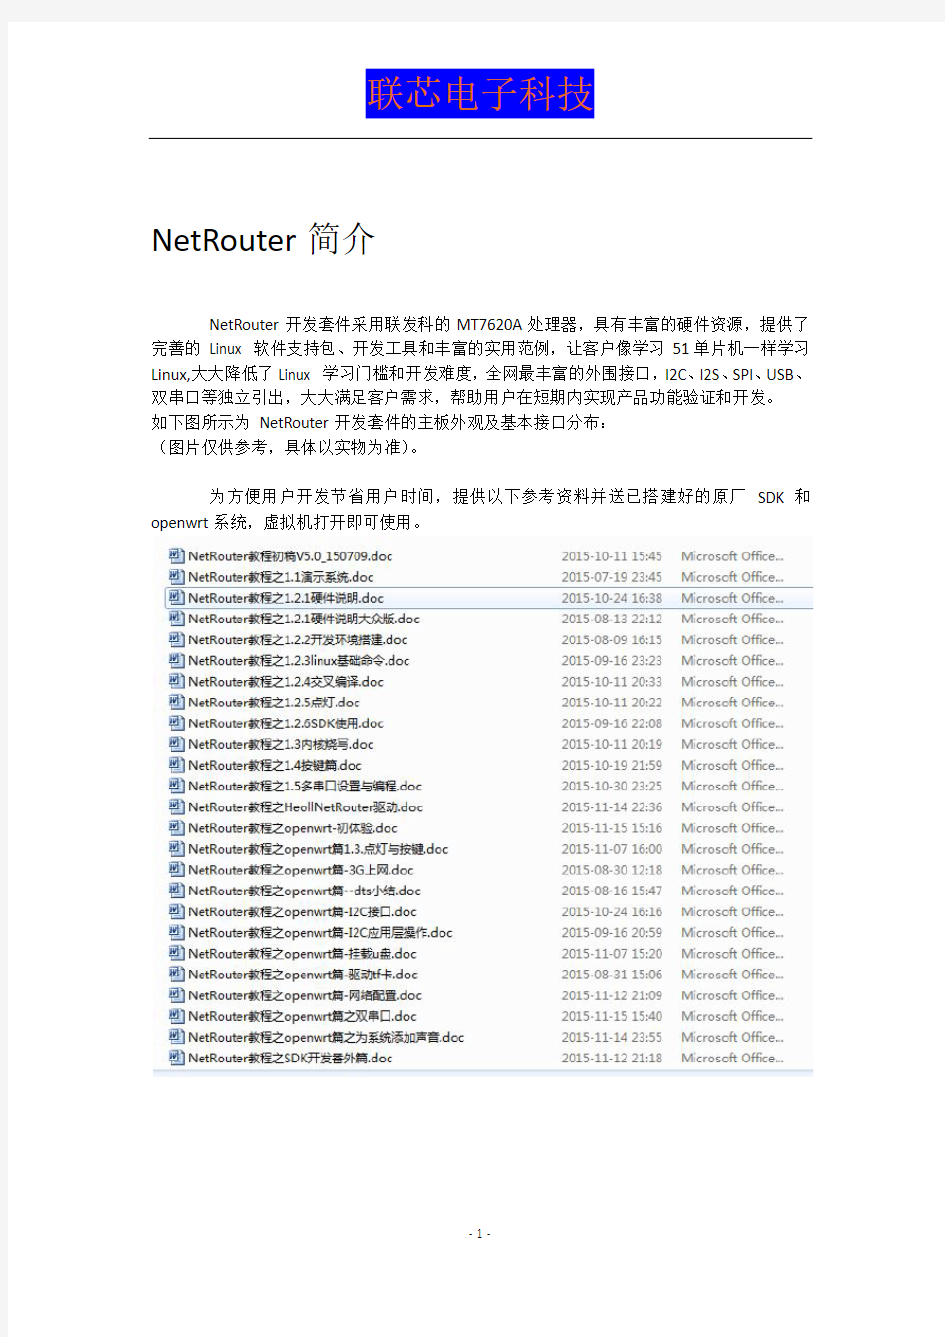 MT7620入门教程-NetRouter硬件说明